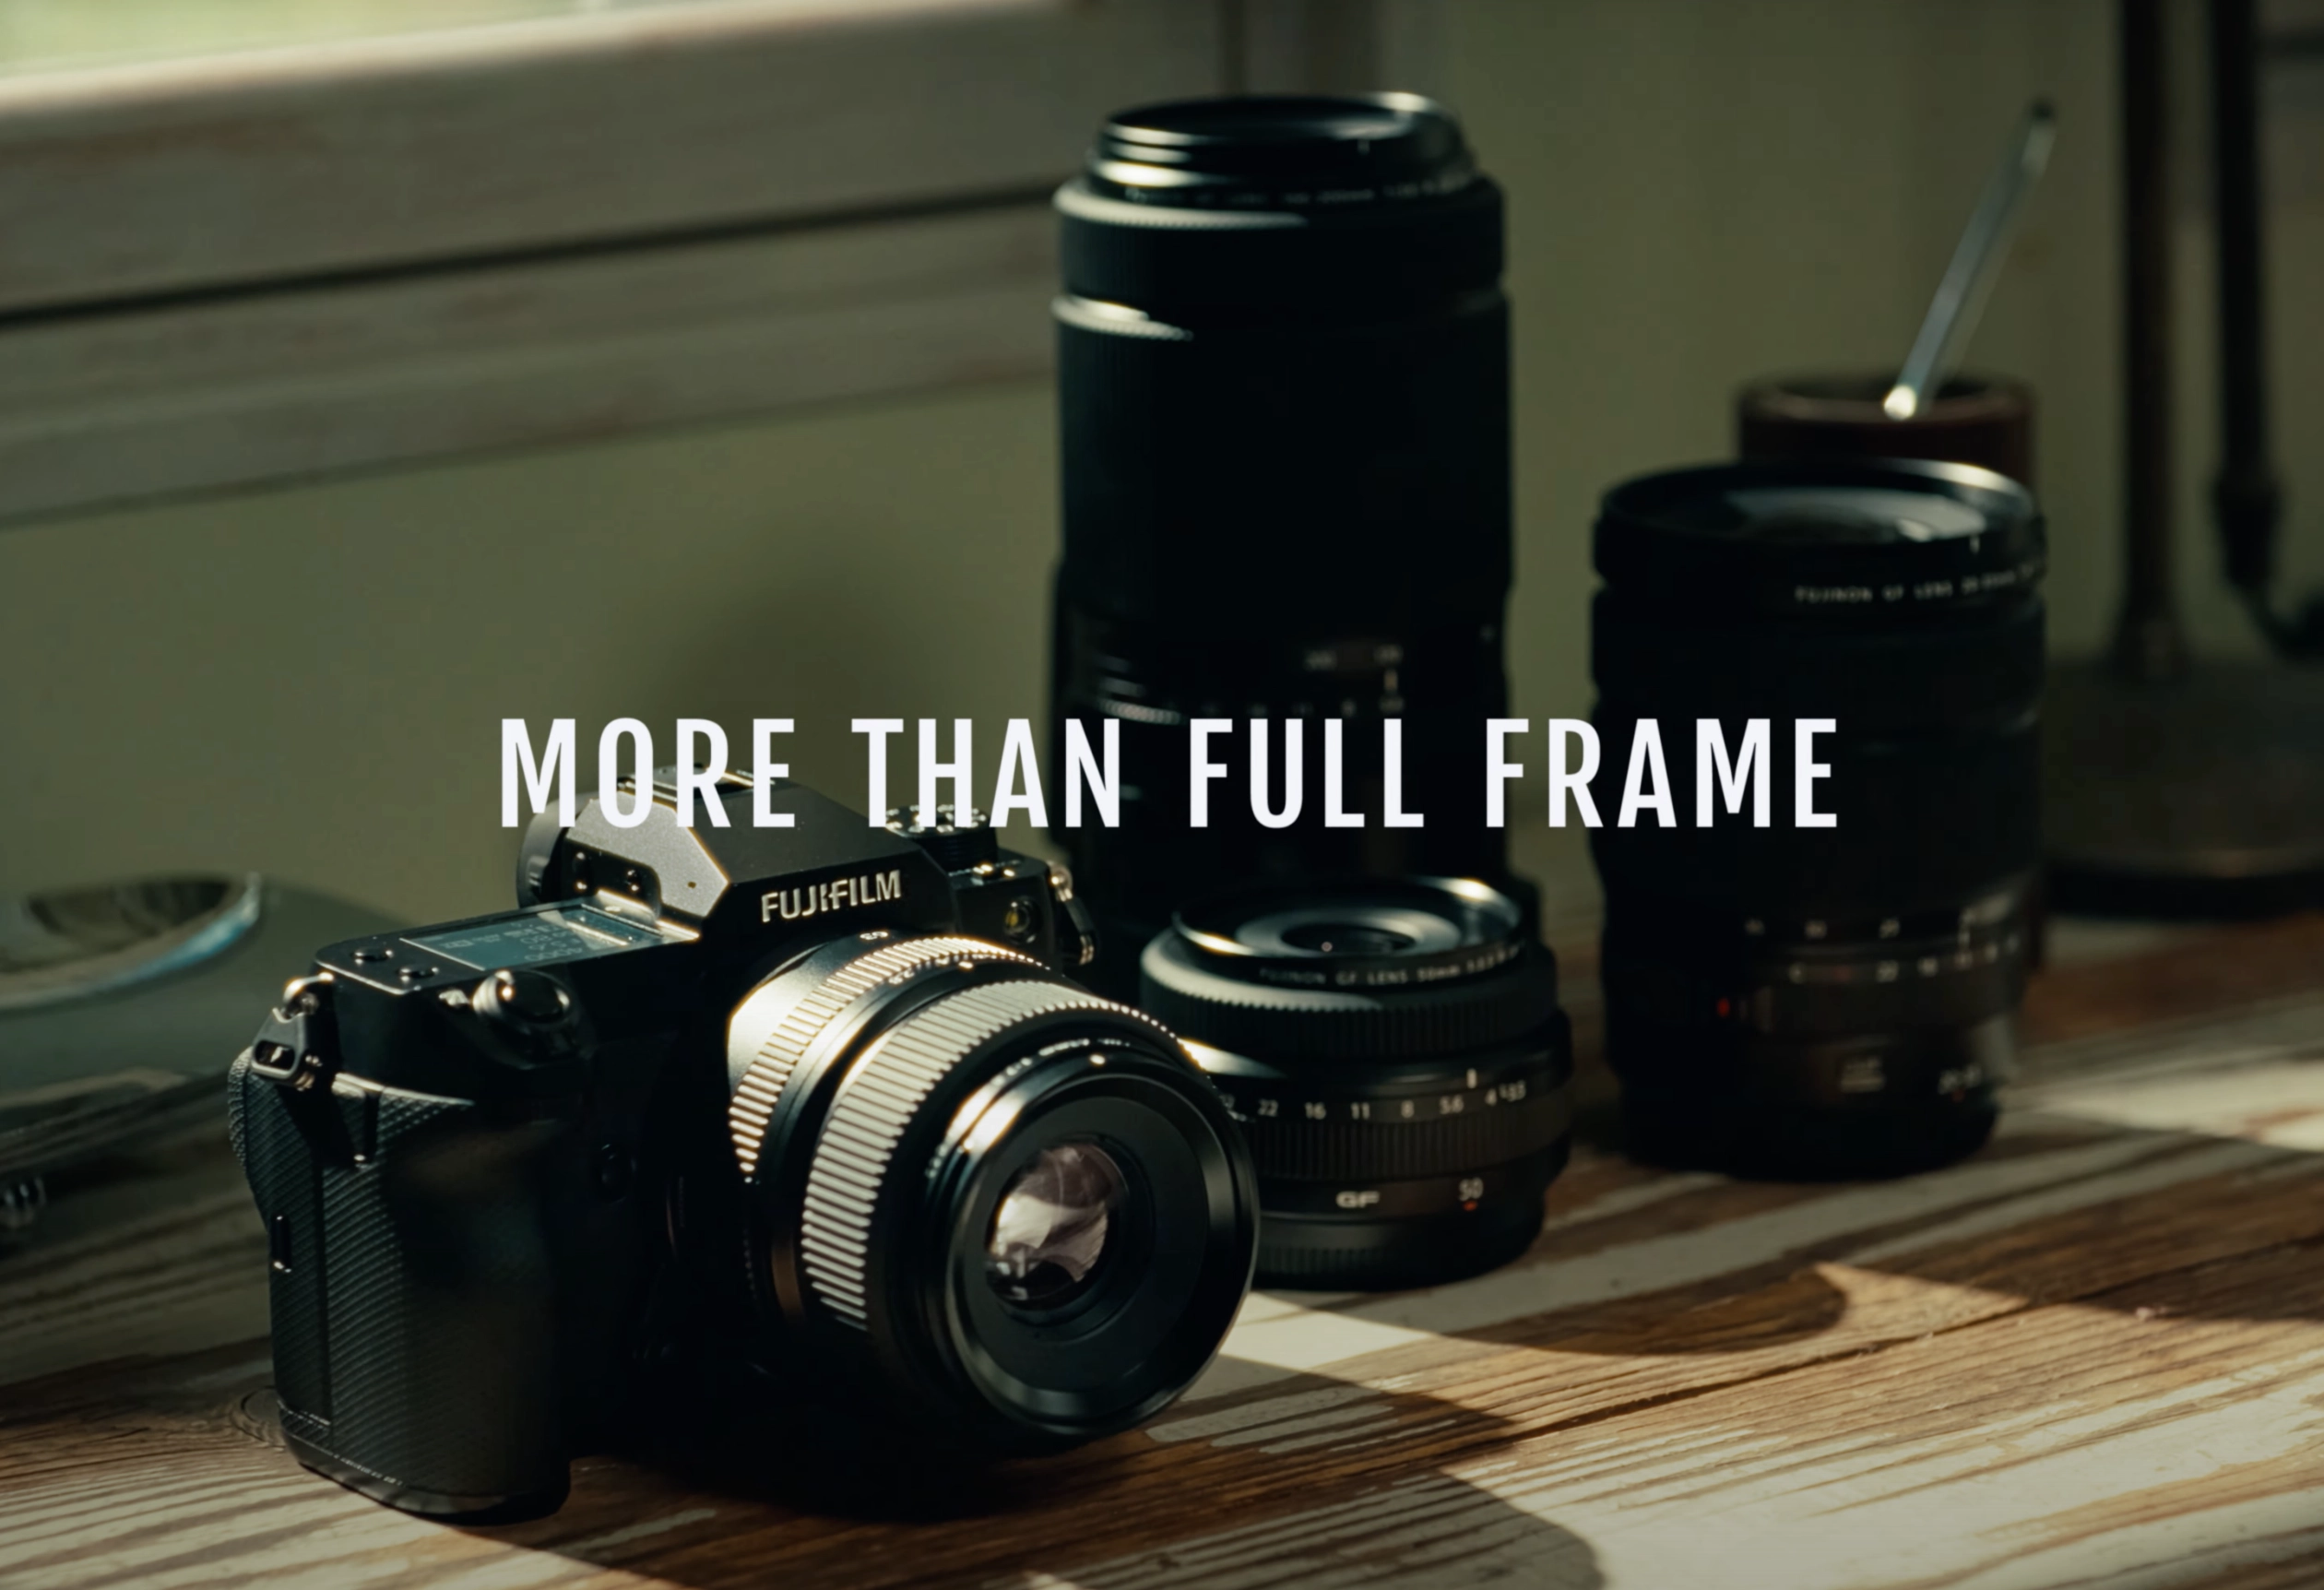 Máy ảnh Fujifilm GFX 100S II